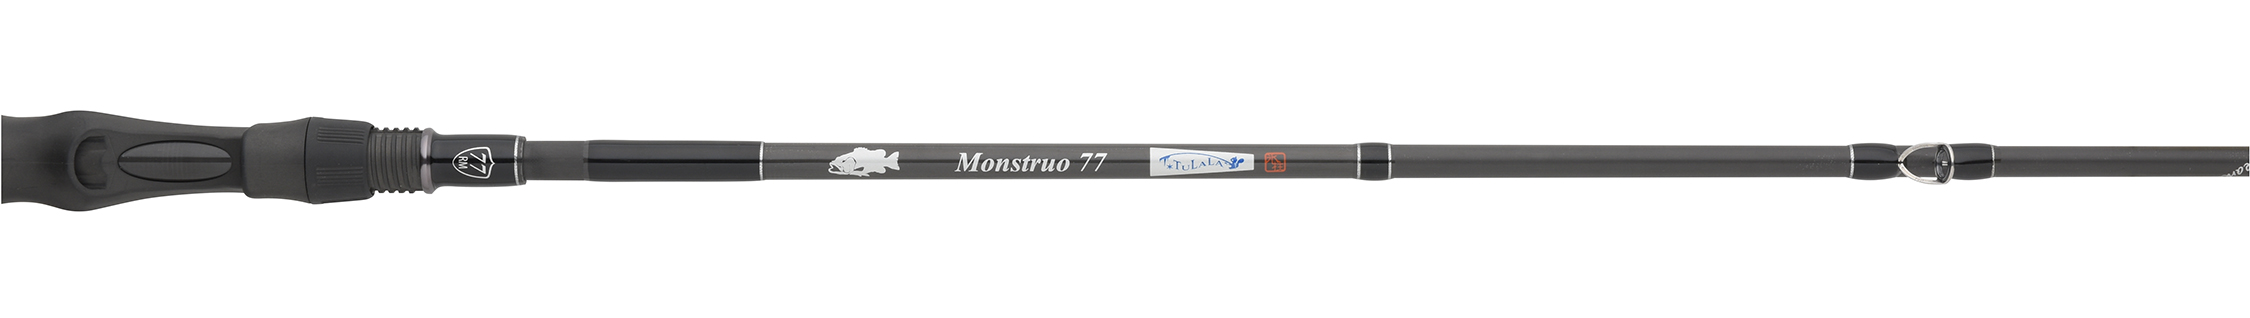 Monstruo77 | ロゴ